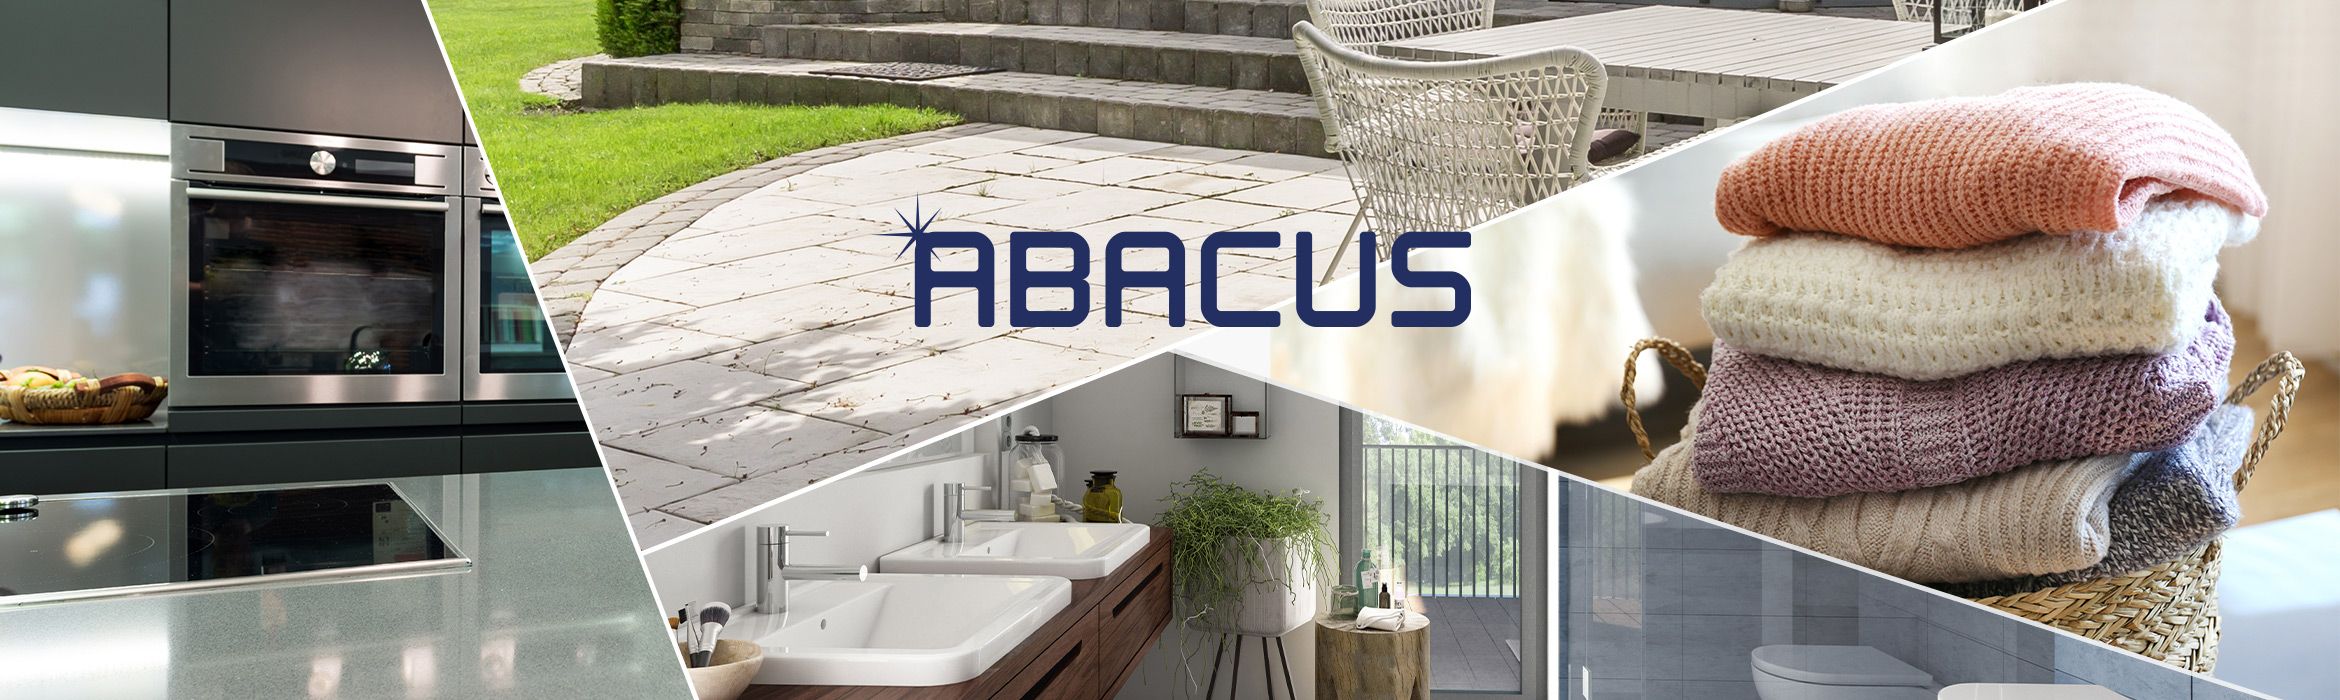 ABACUS Reinigung & Pflege